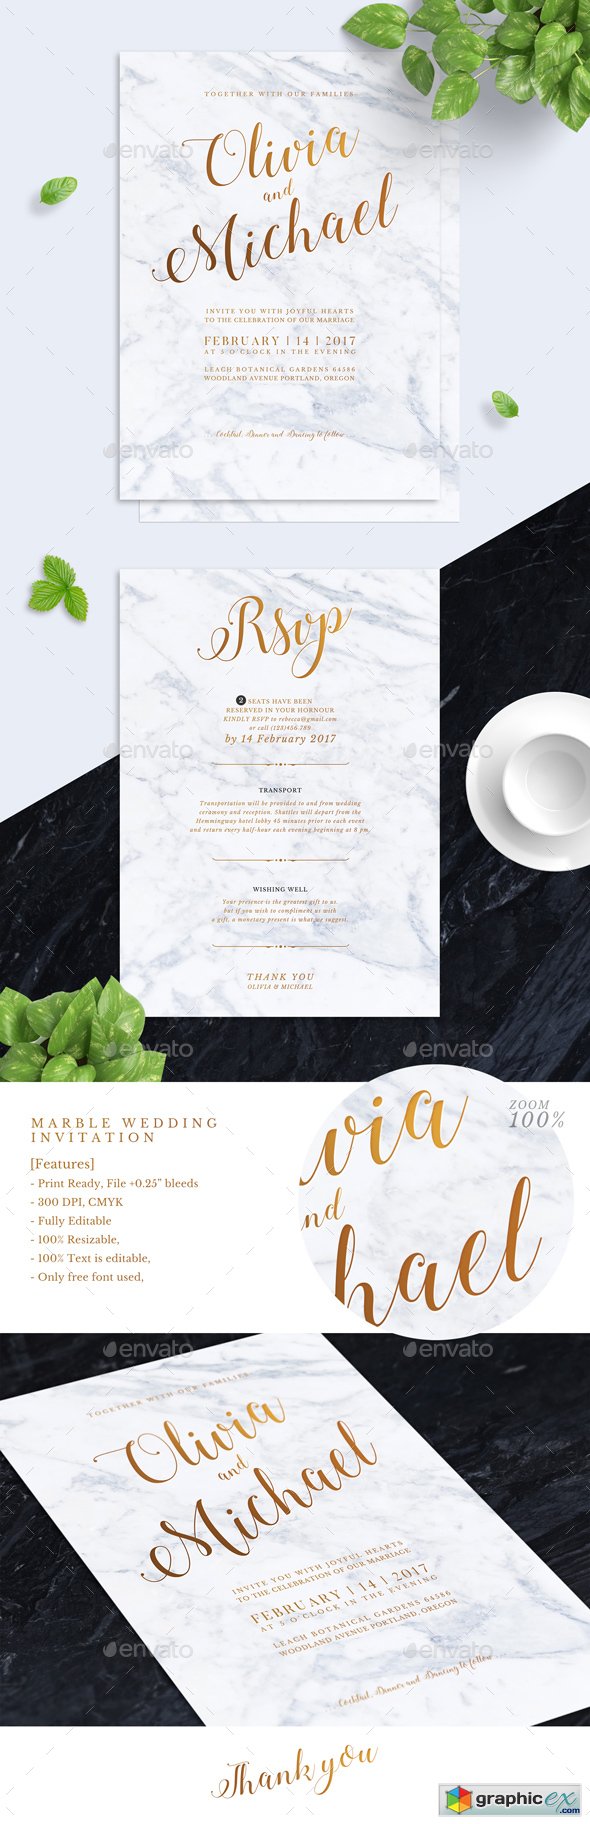 Marbel Wedding Invitation